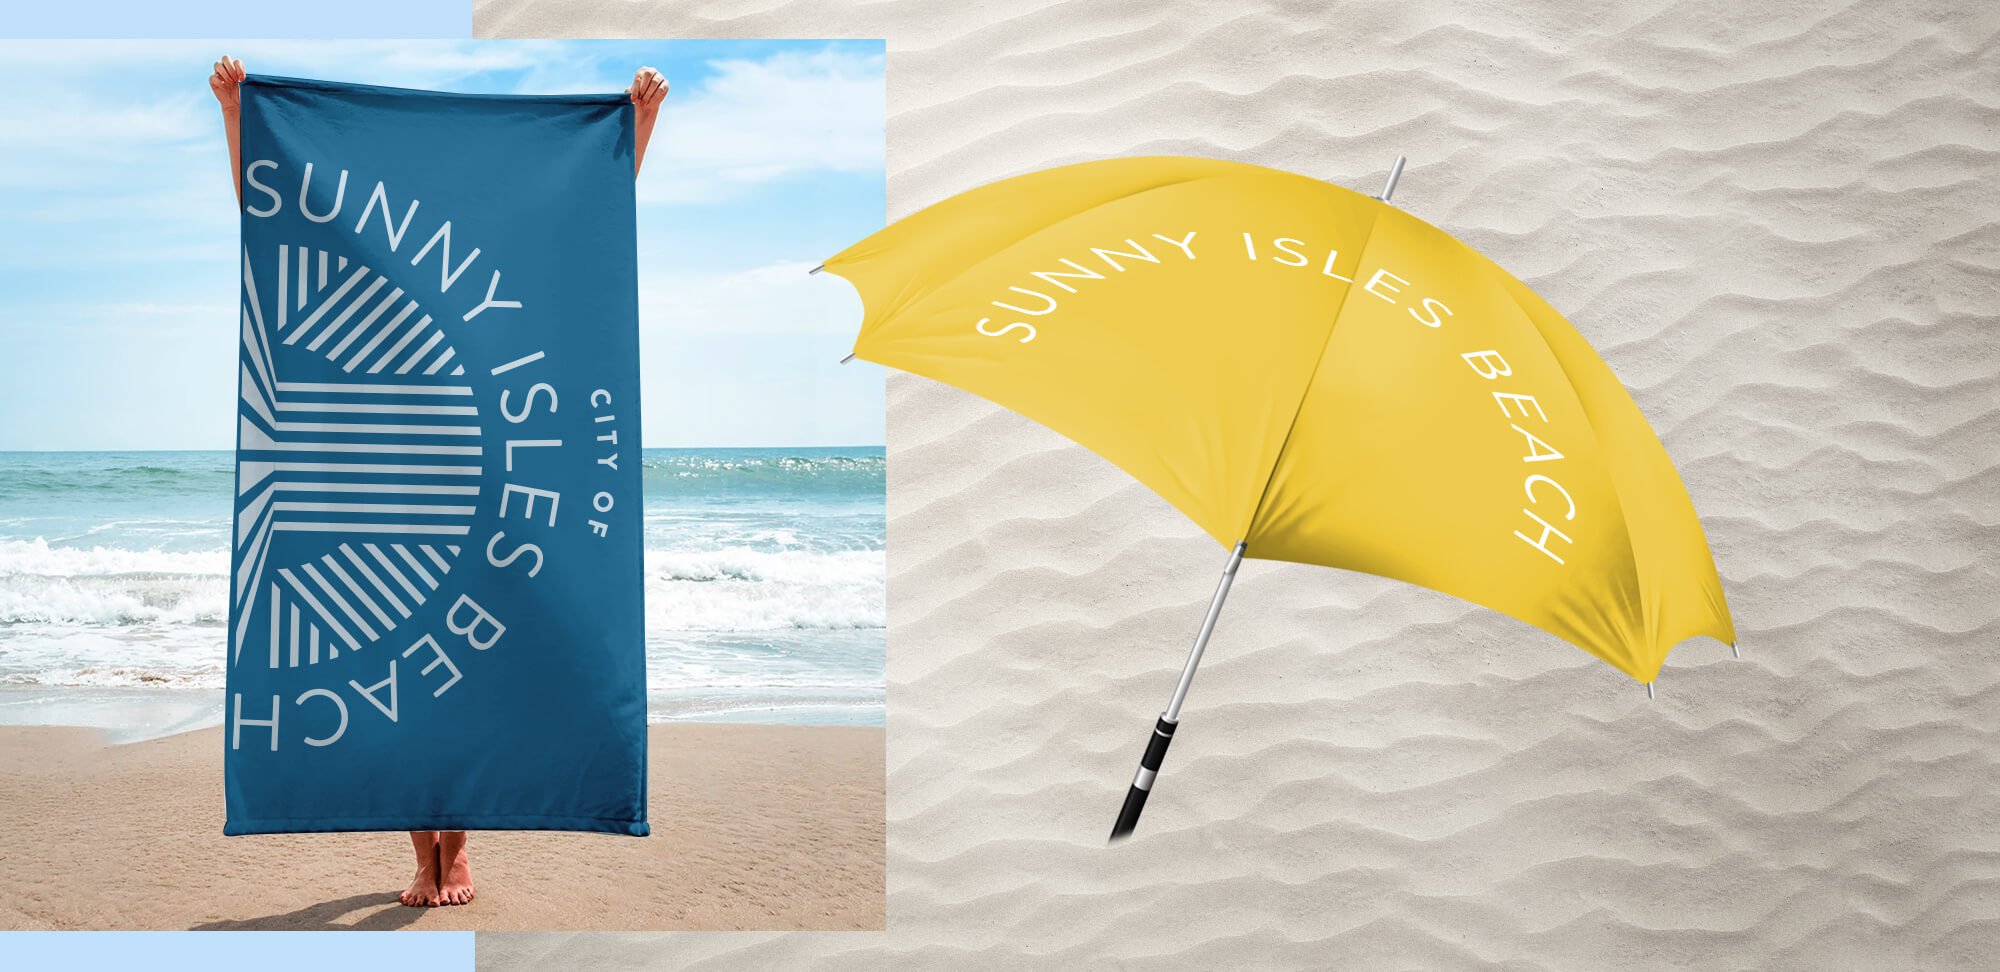 Jacober Creative Brand Identity for Sunny Isles Beach